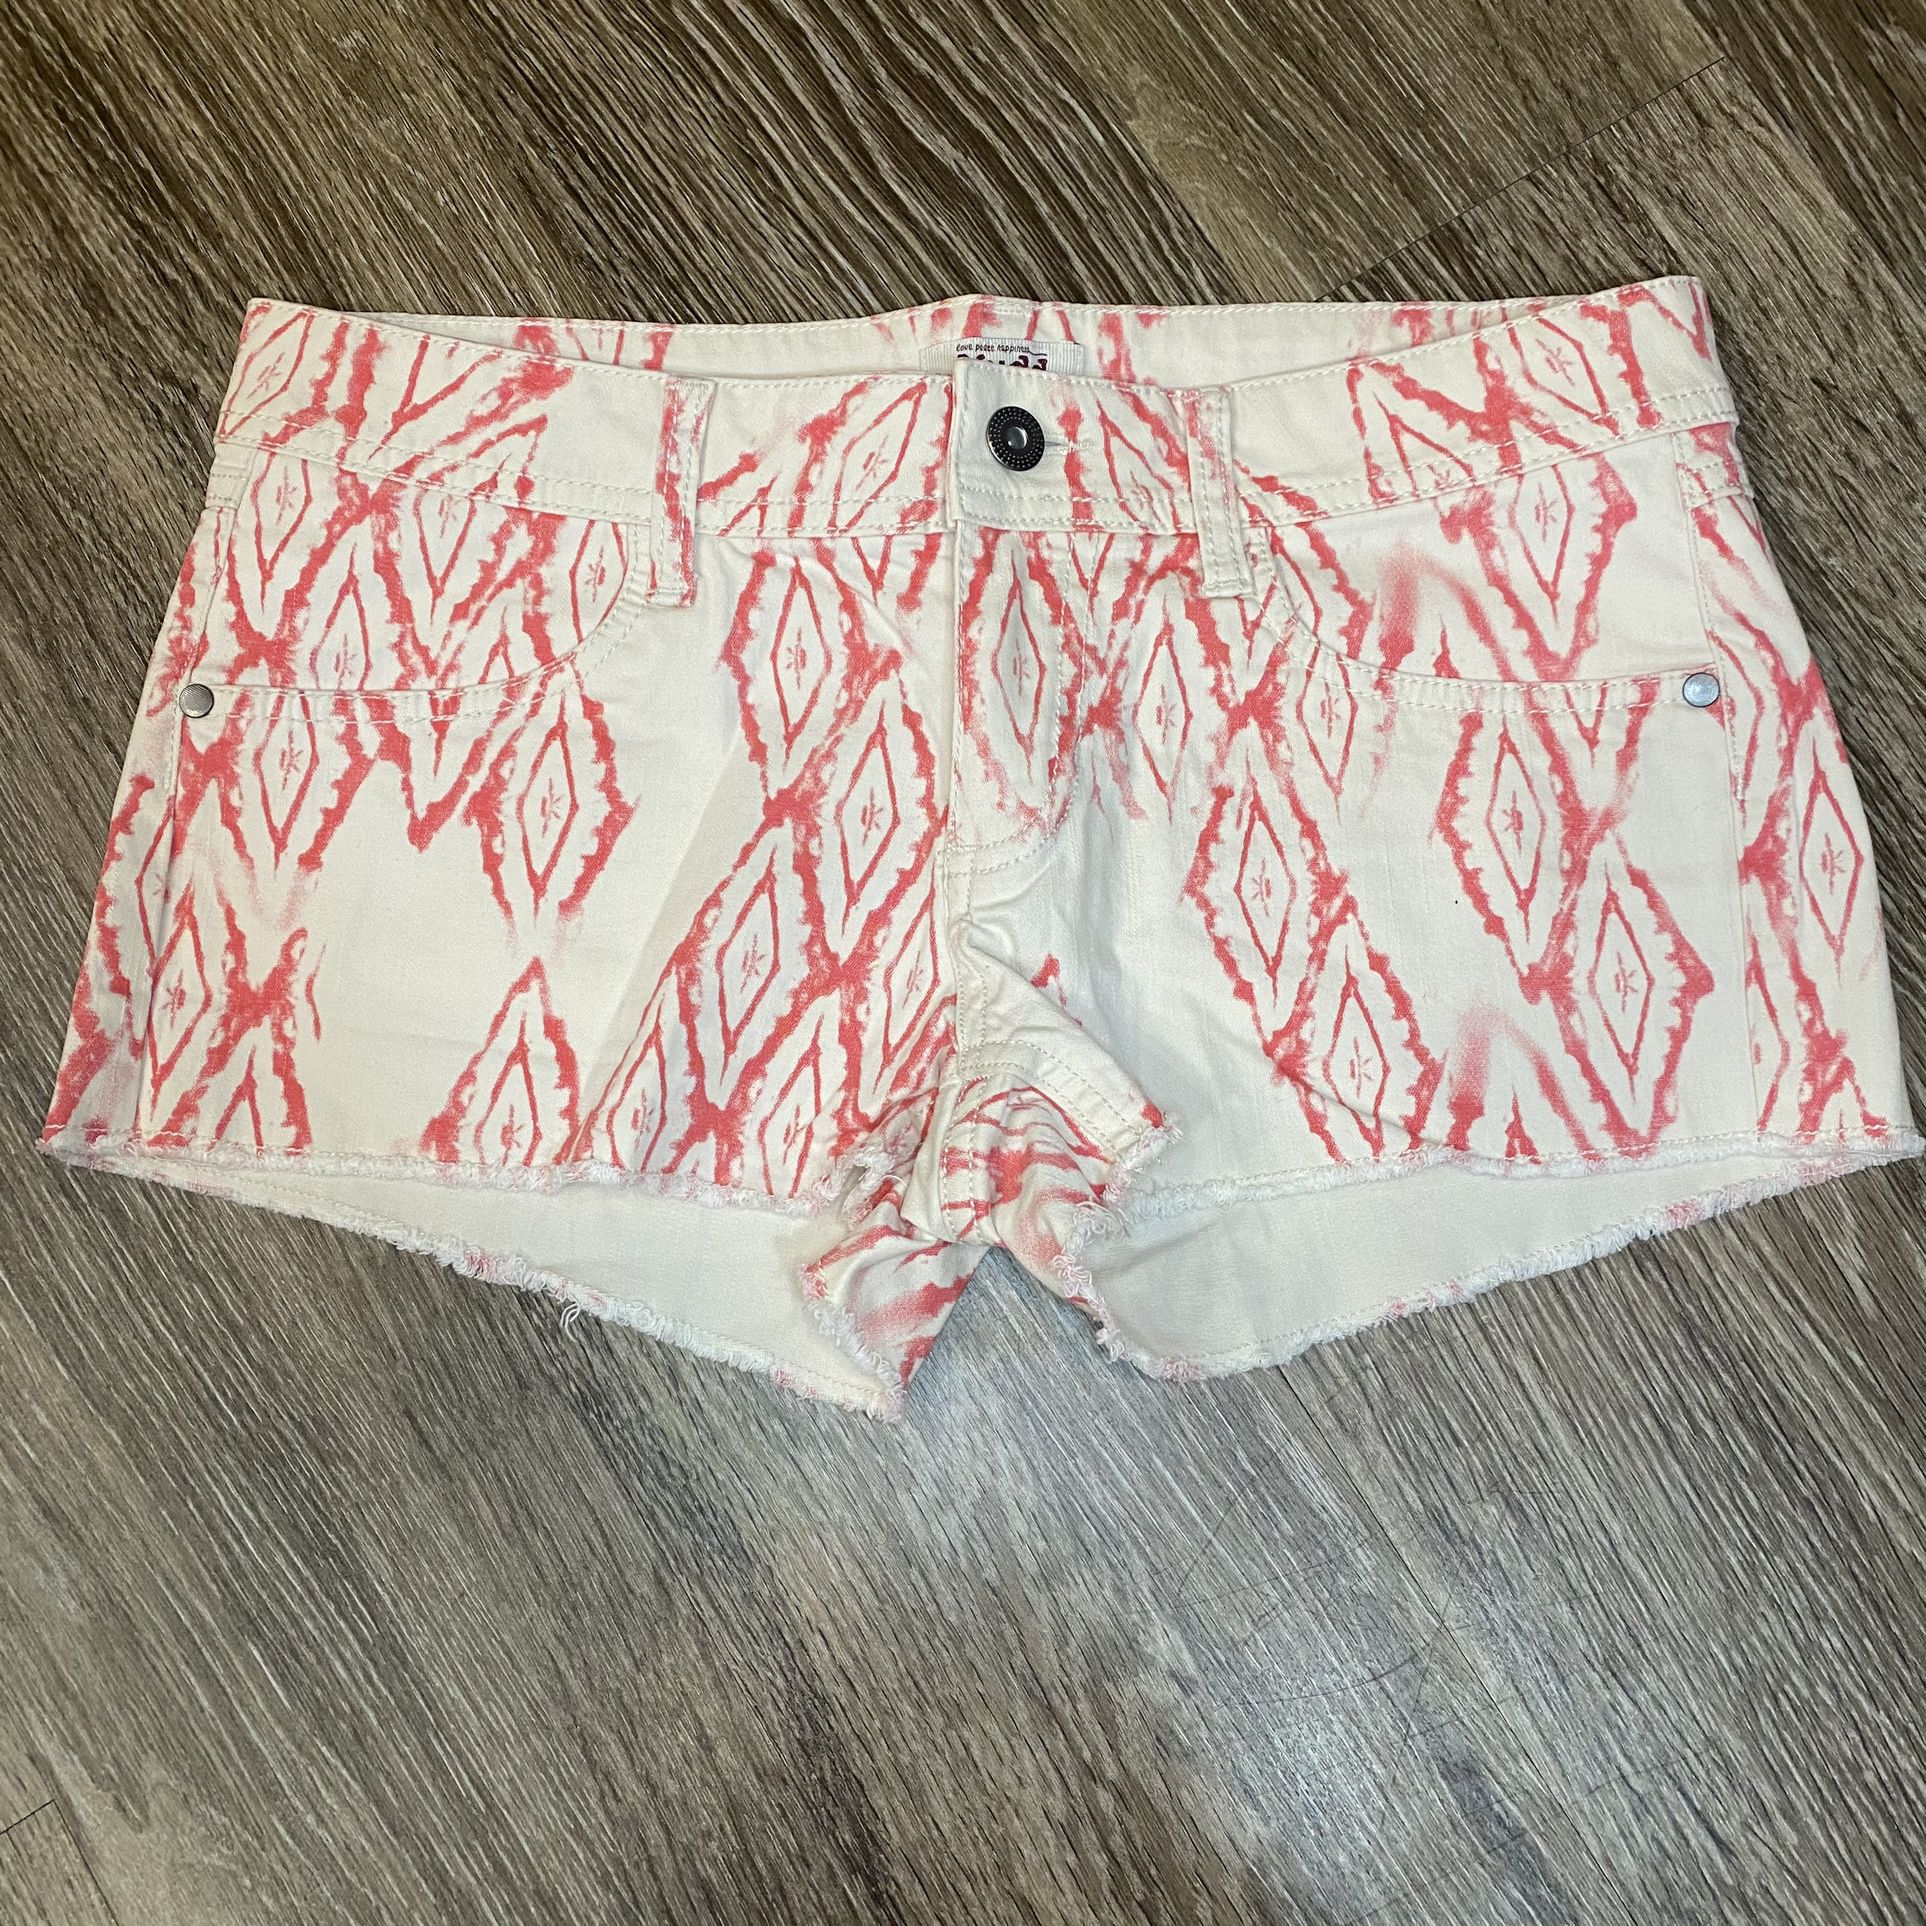 Womens Cream and Pink Printed Shorts - 9